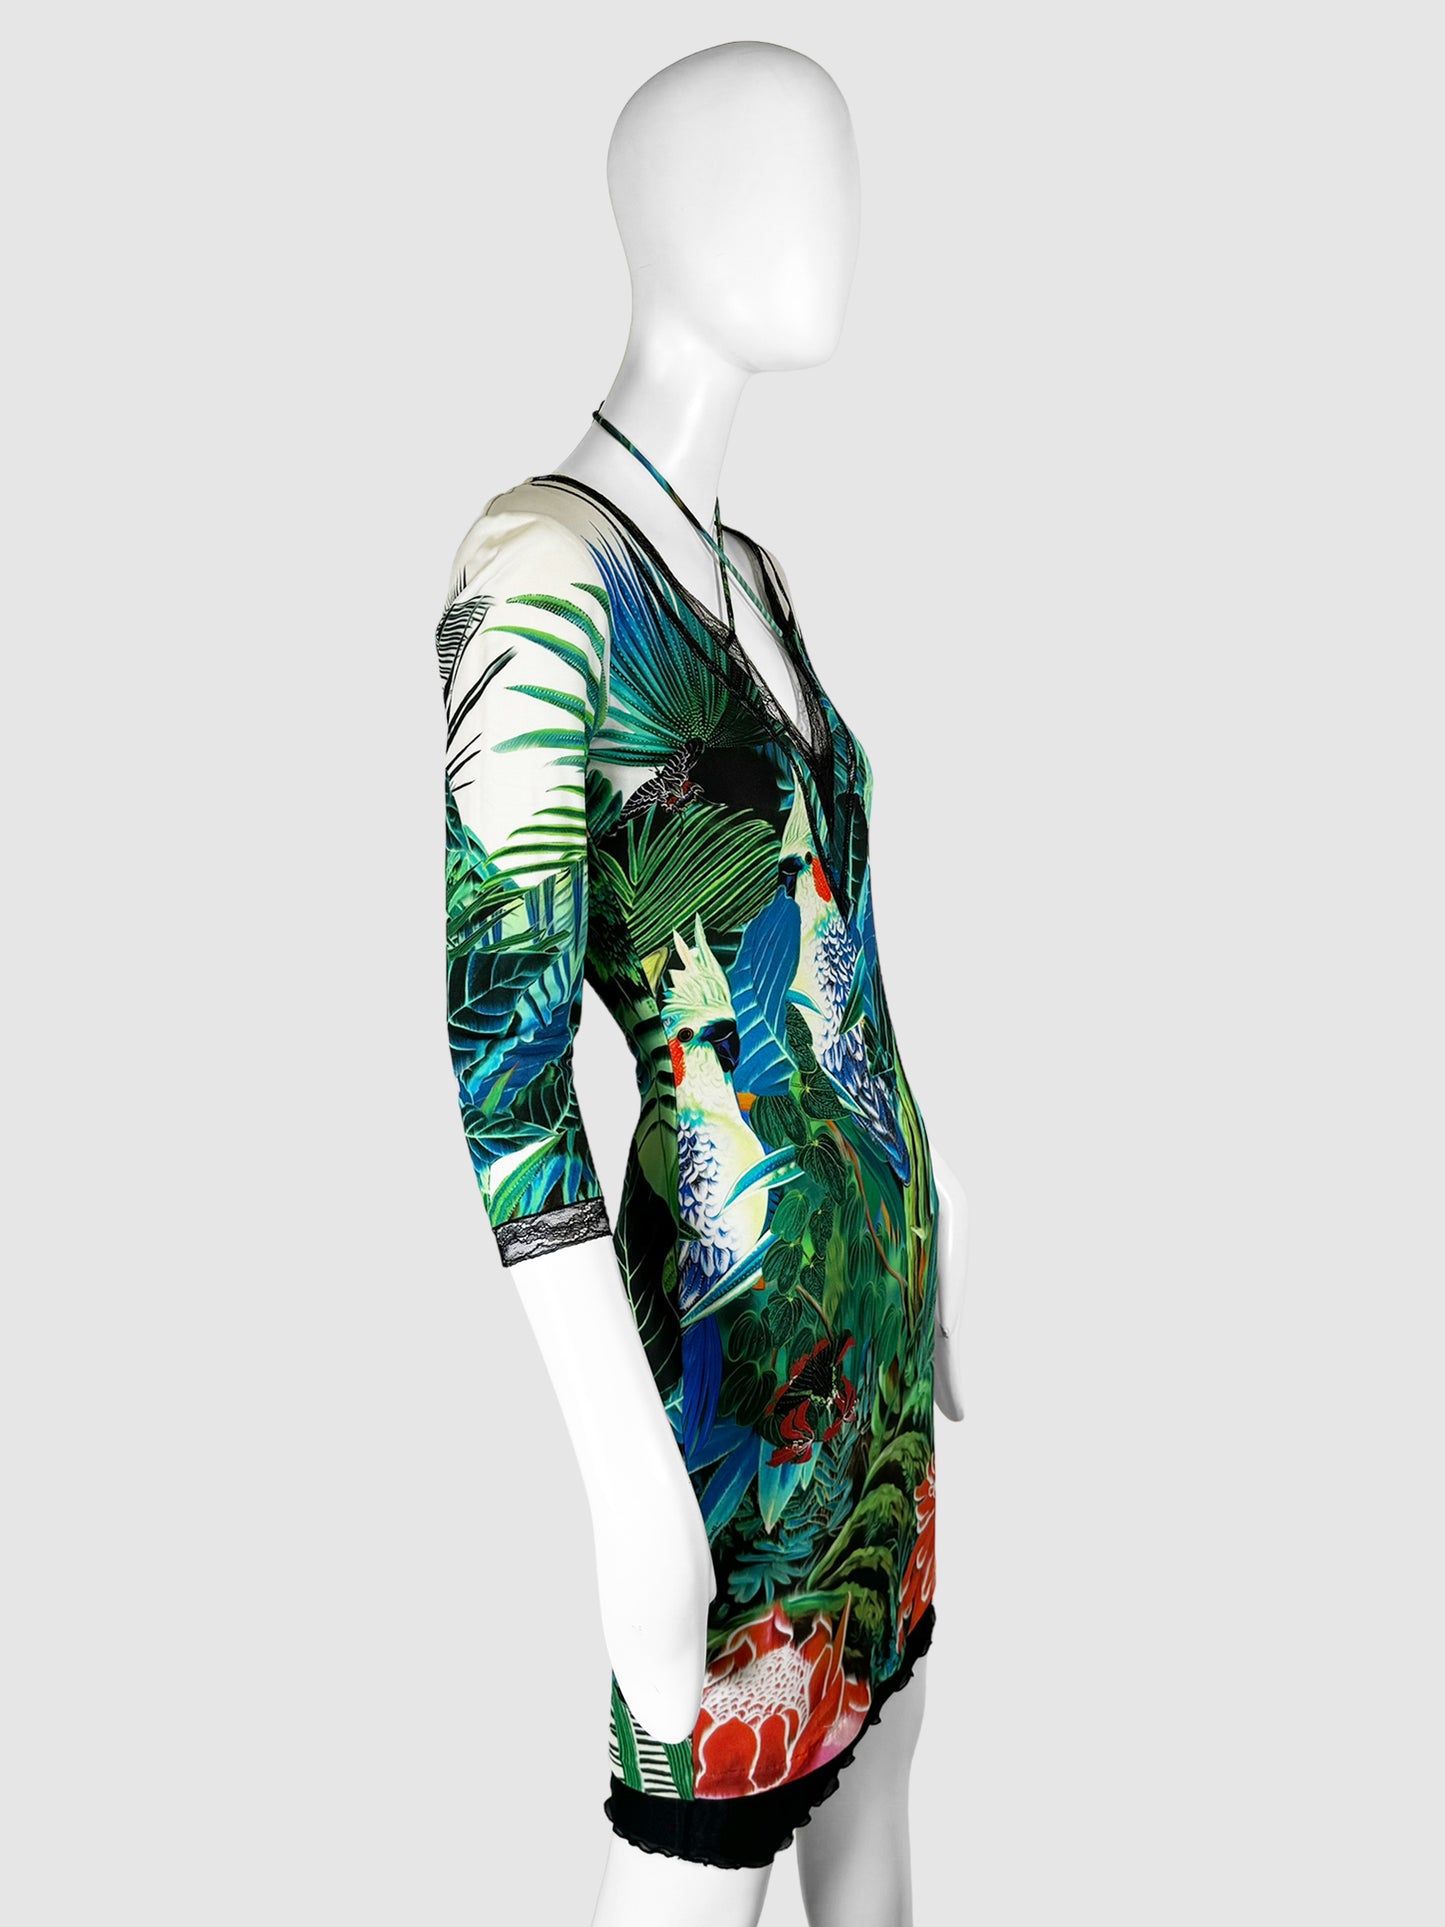 Tropical Print Lace Trim Dress - Size 40